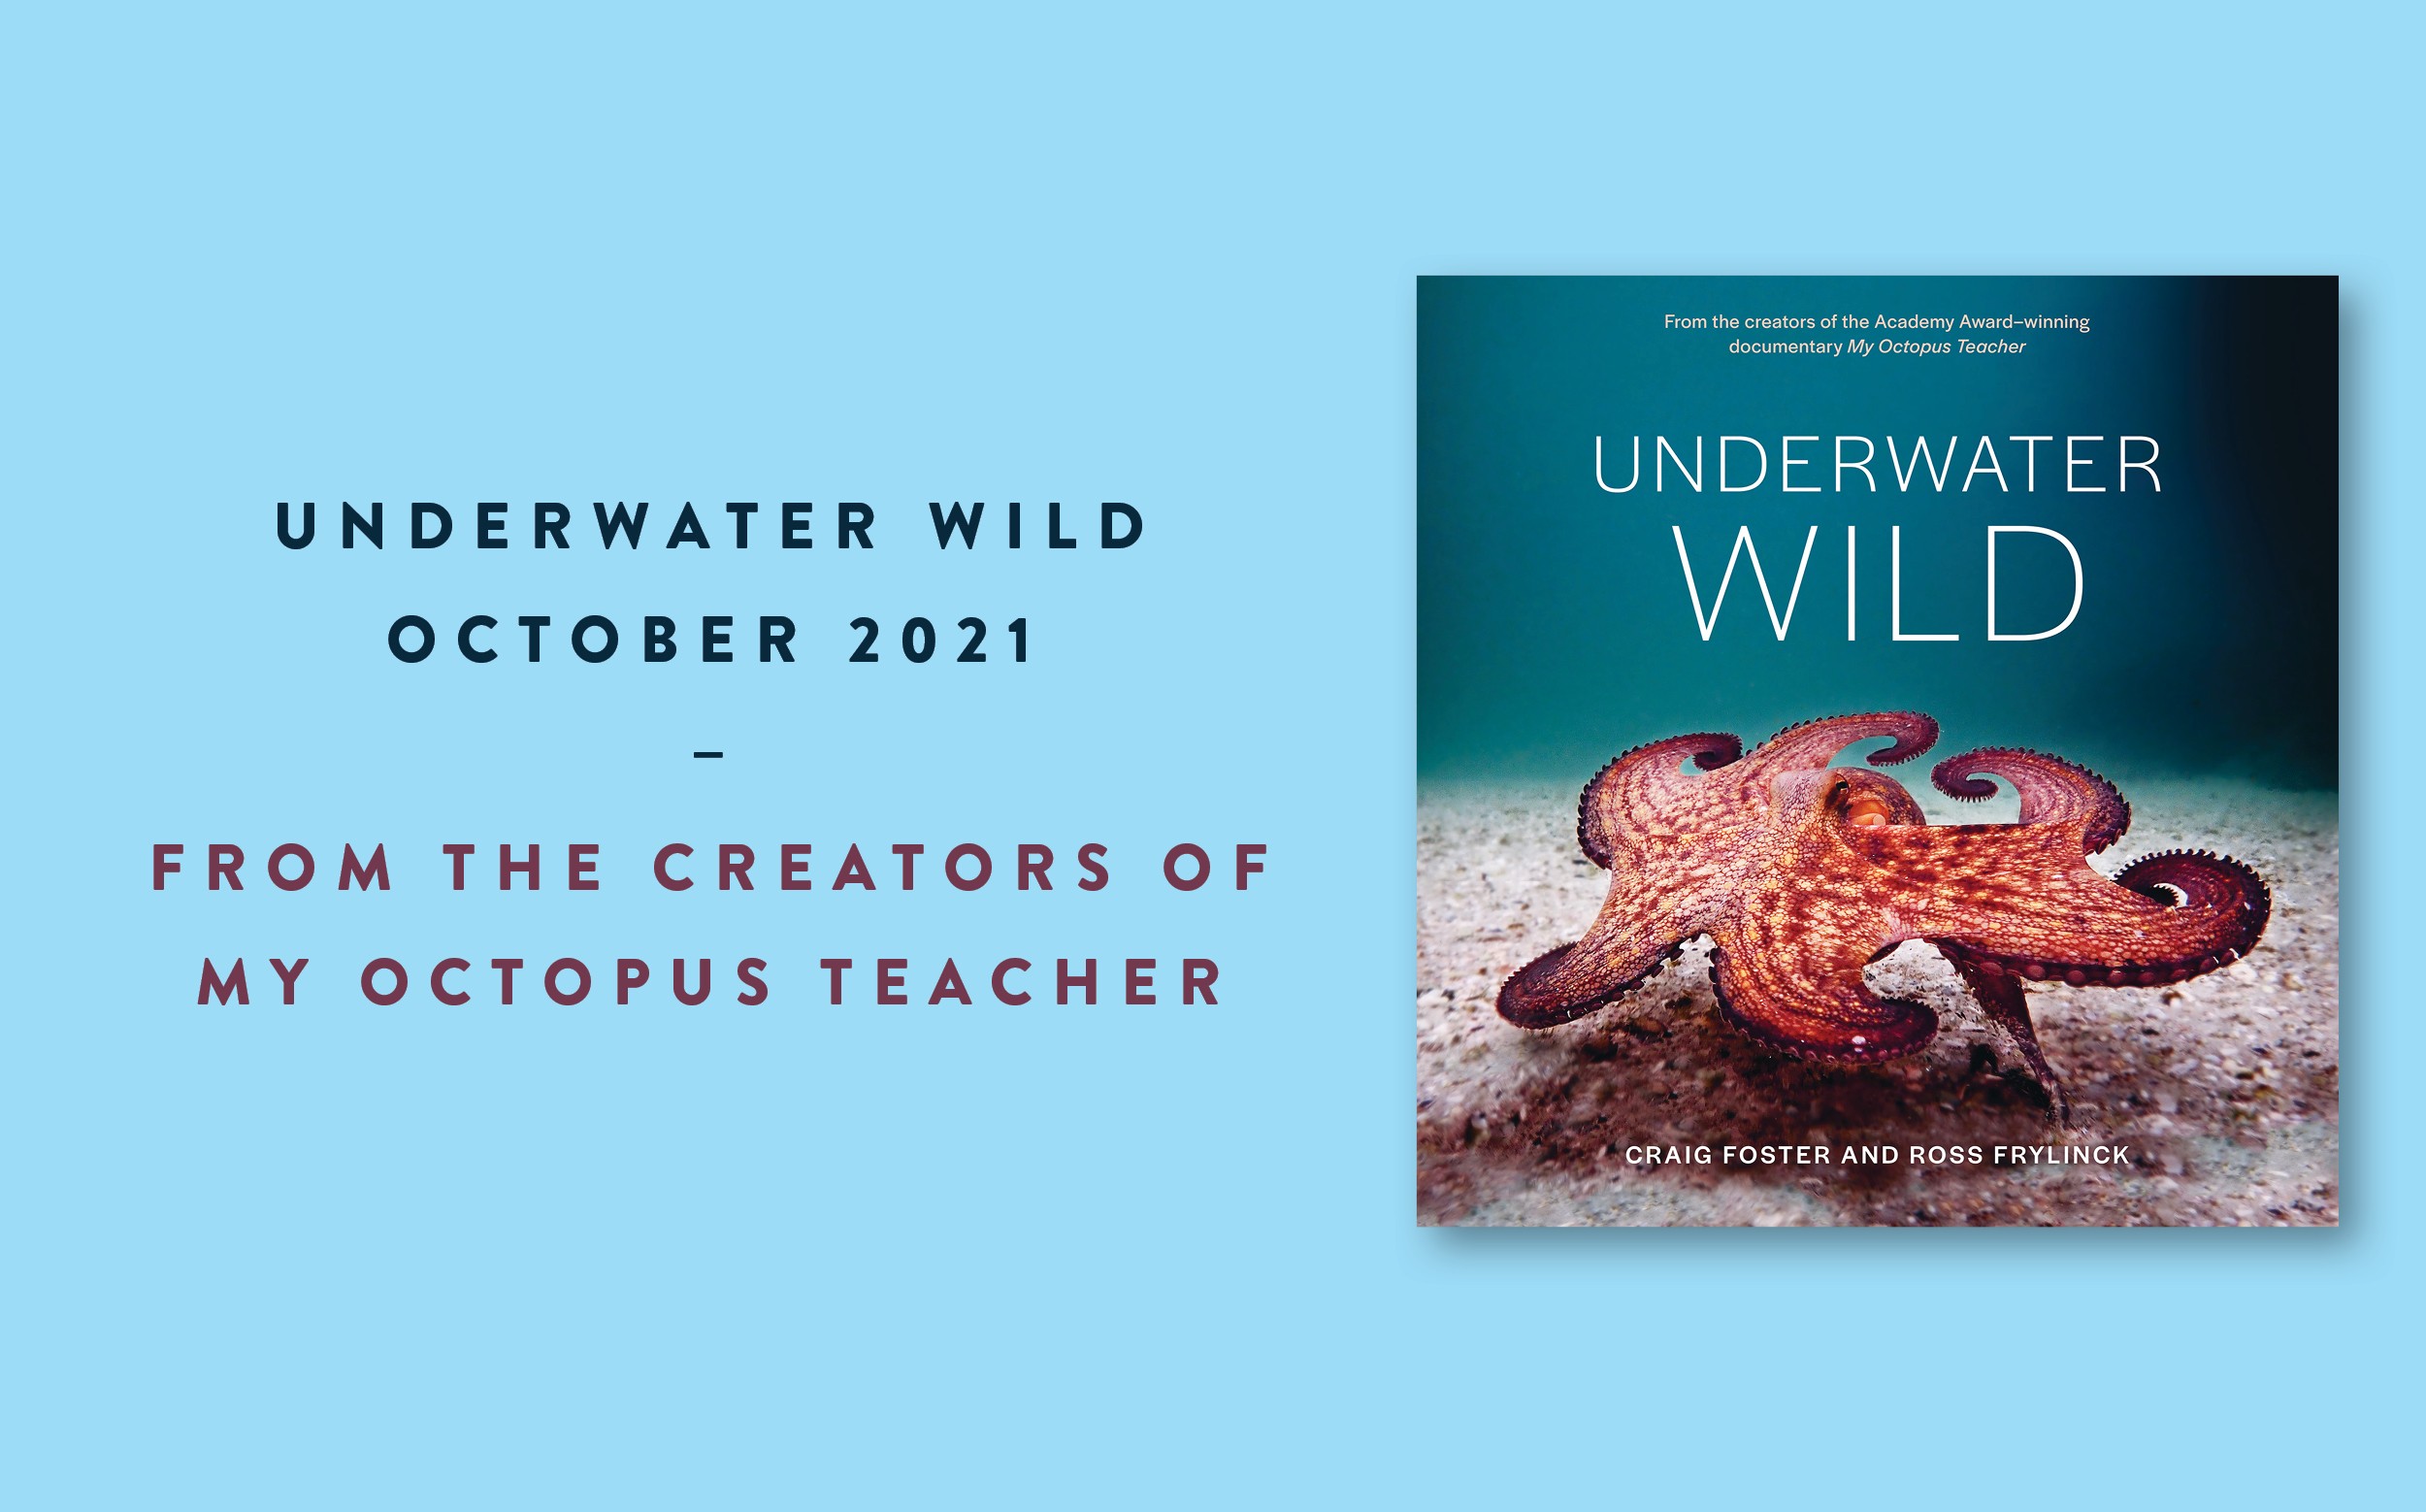 Underwater Wild is coming soon